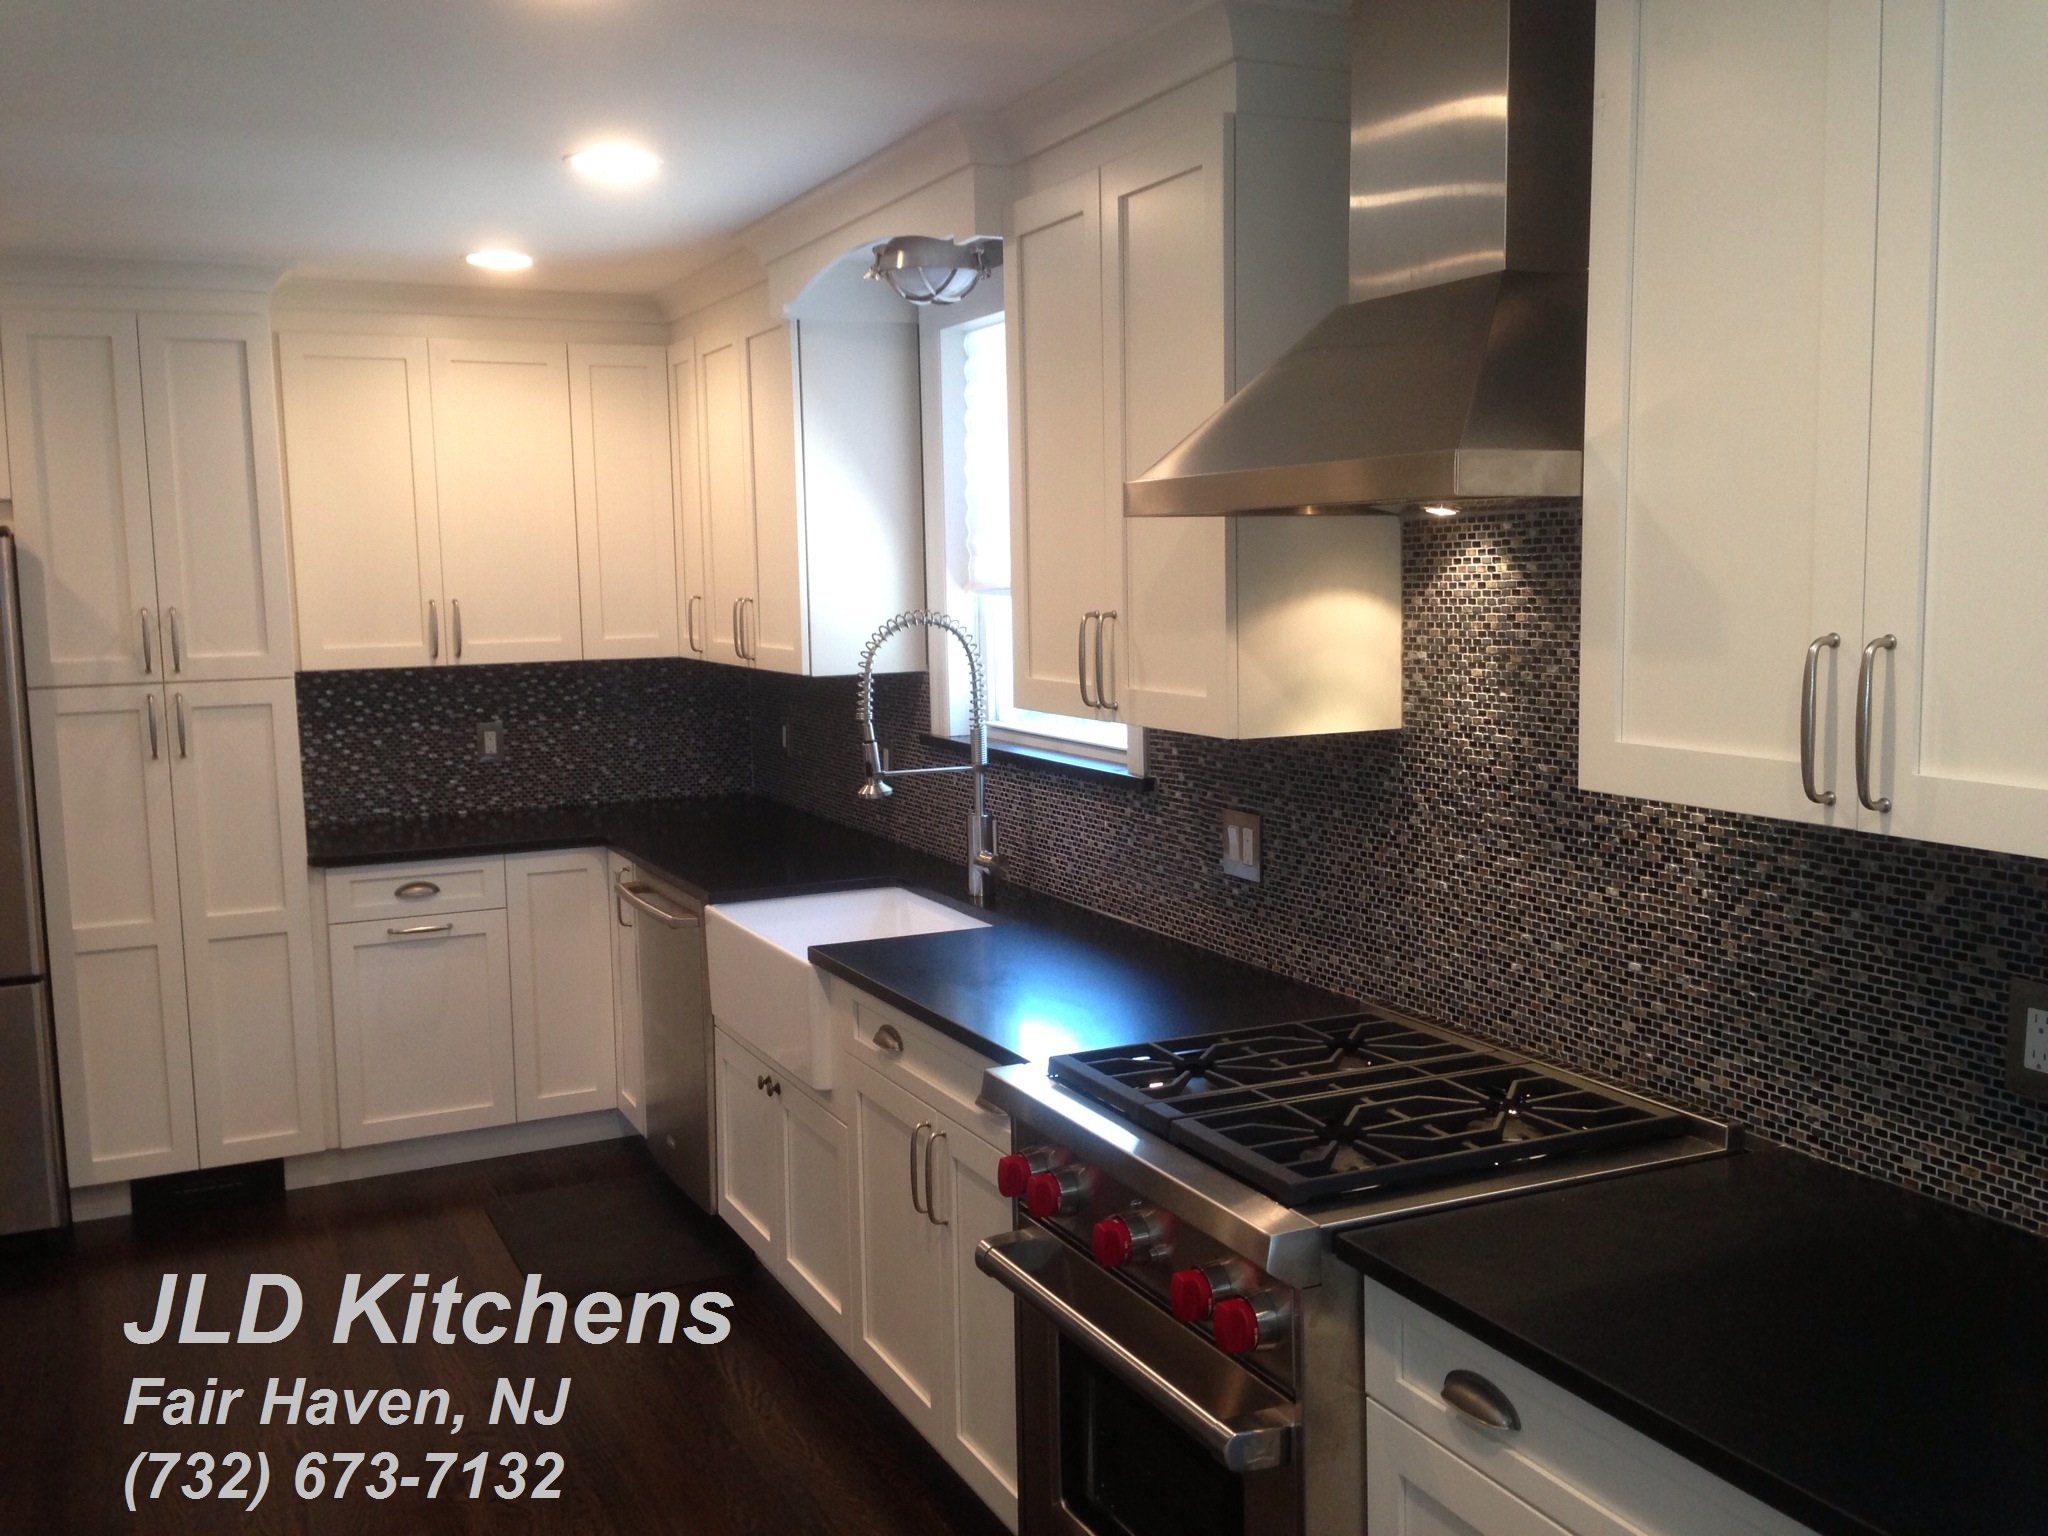 JLD Kitchens And Design LLC Kitchens Fair Haven NJ